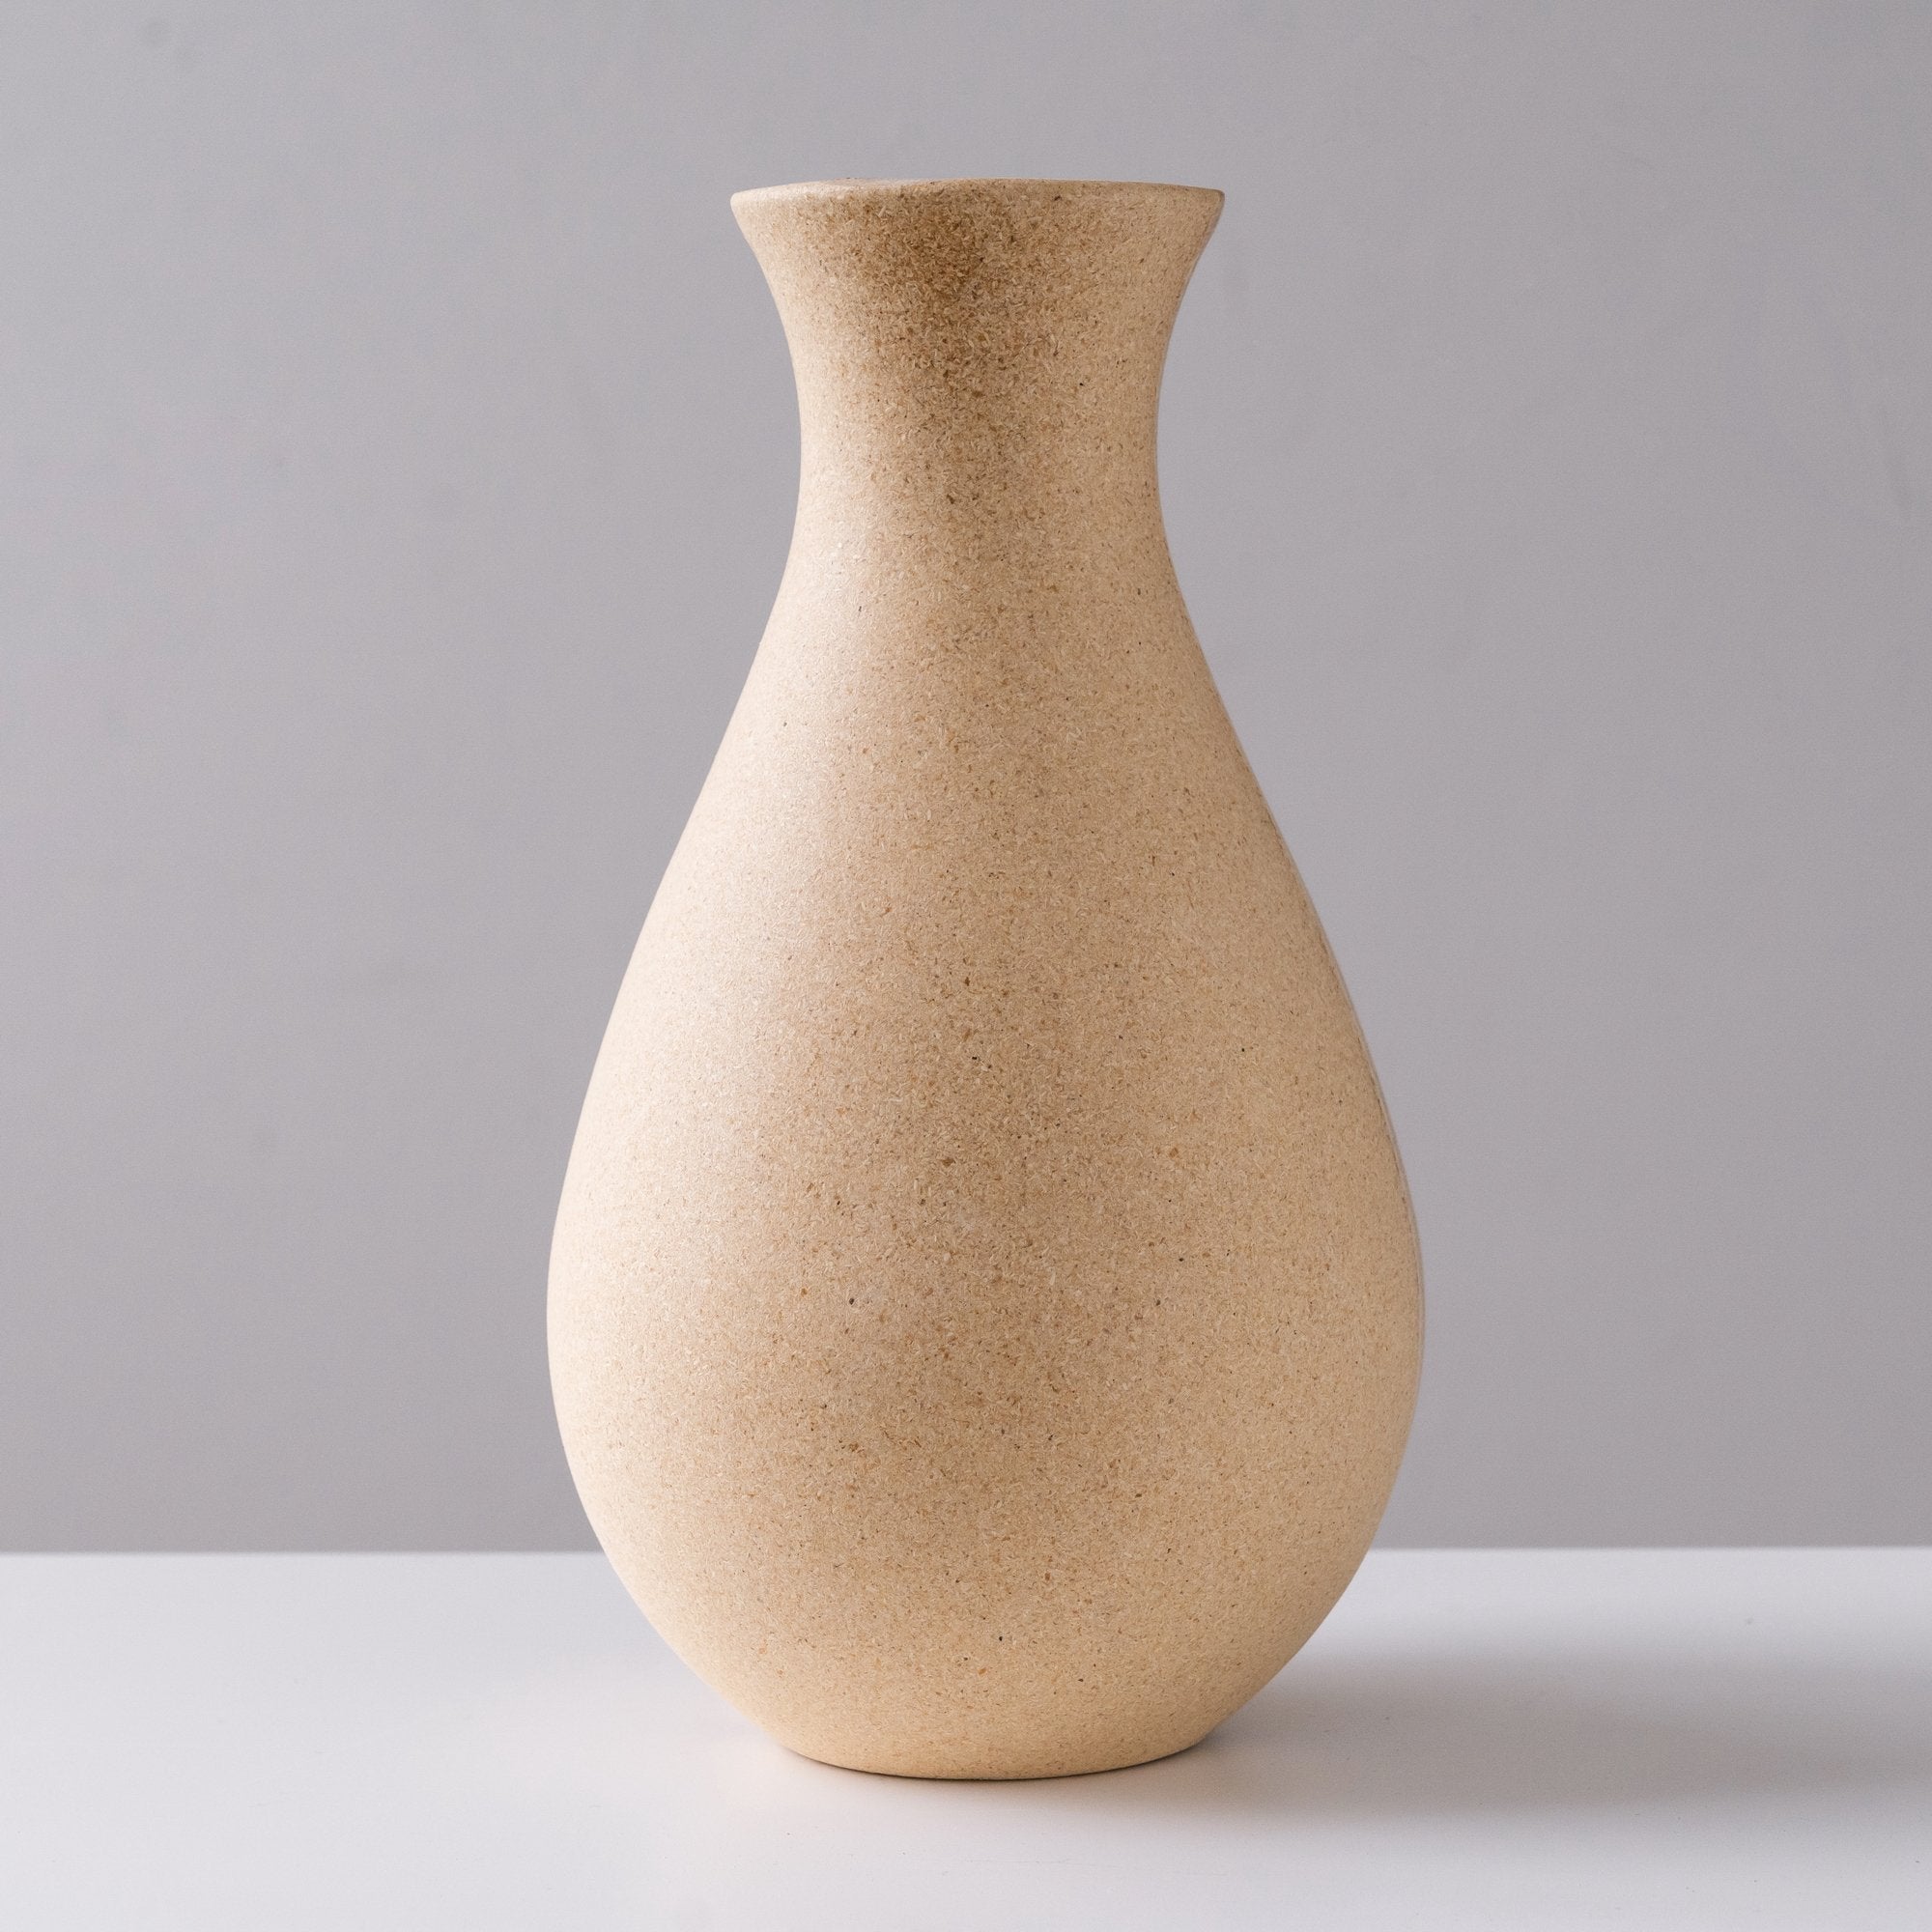 Wood Vase for Tabletop Centerpiece Fireplace - dazuma